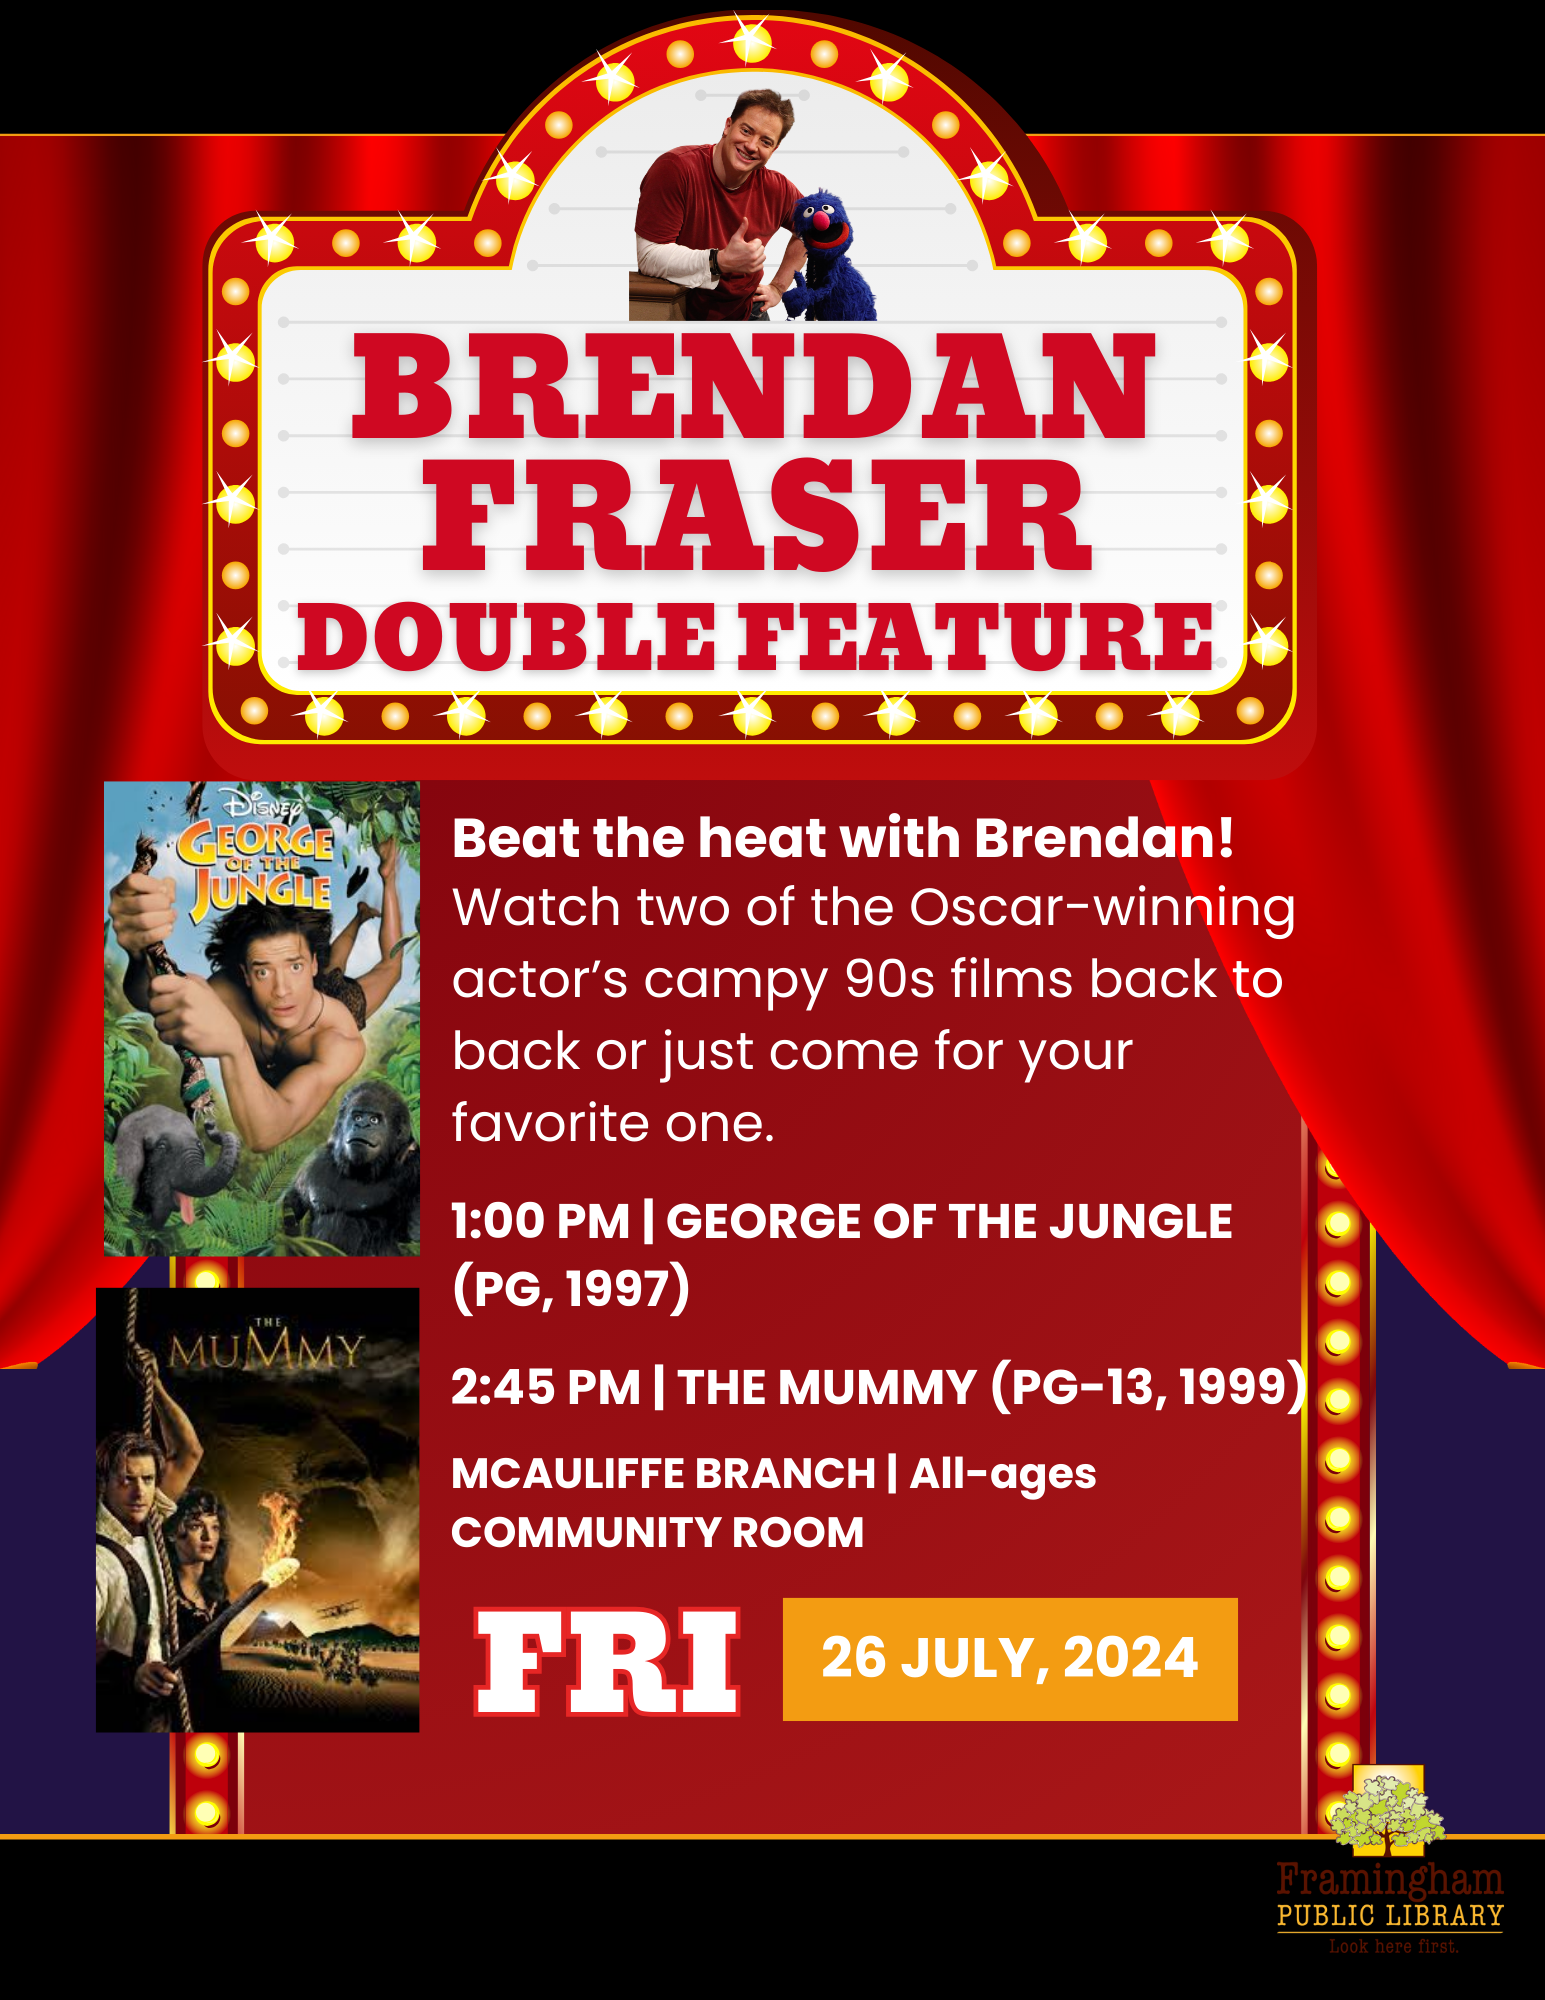 Brendan Fraser Double Feature thumbnail Photo